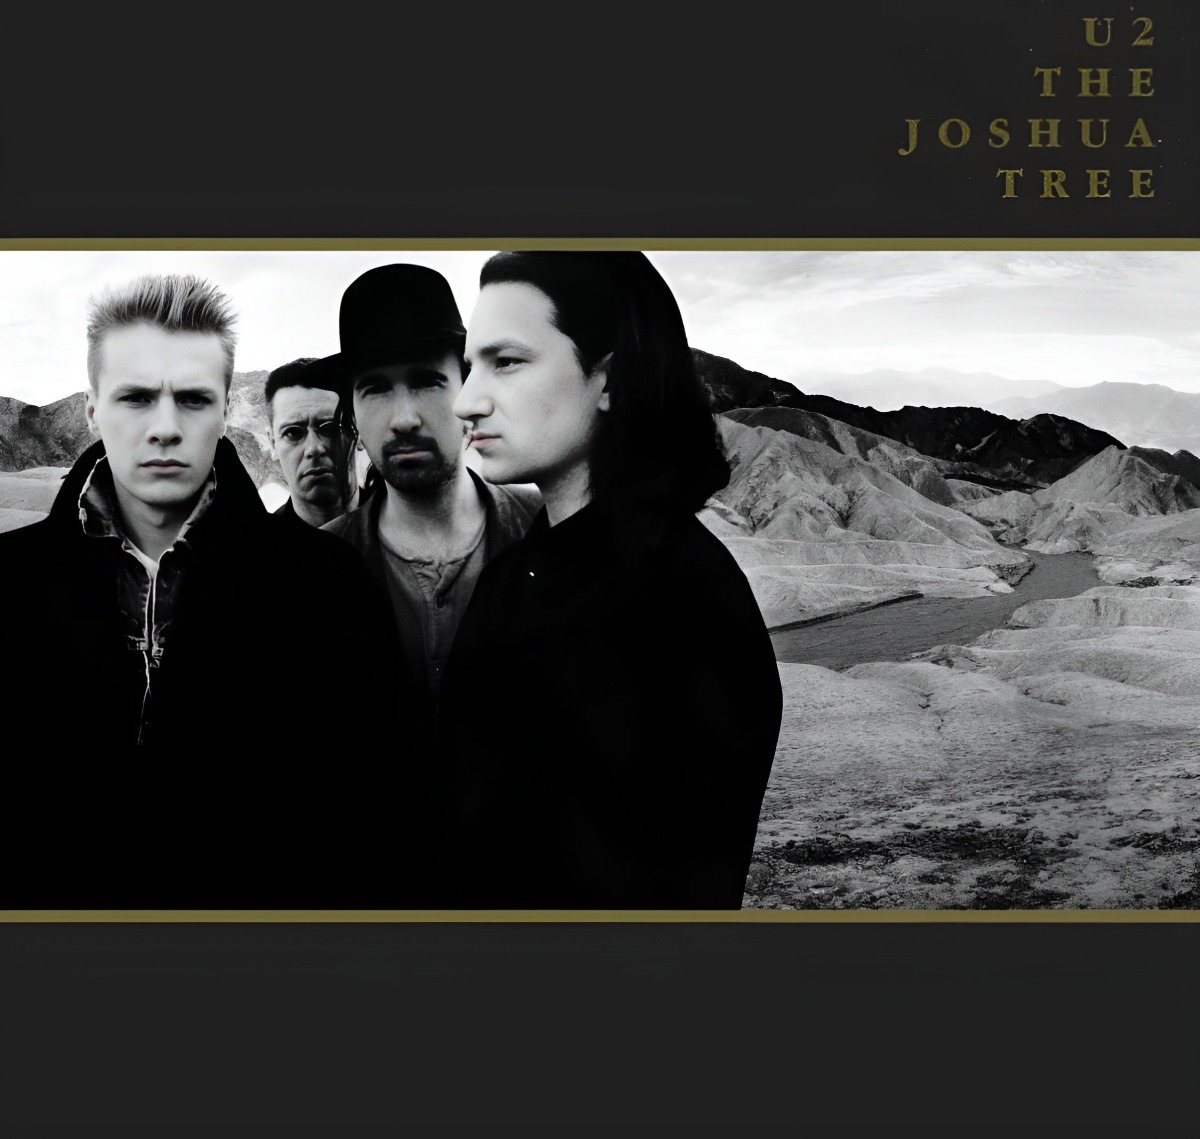 Portada del álbum "The Joshua Tree" de U2